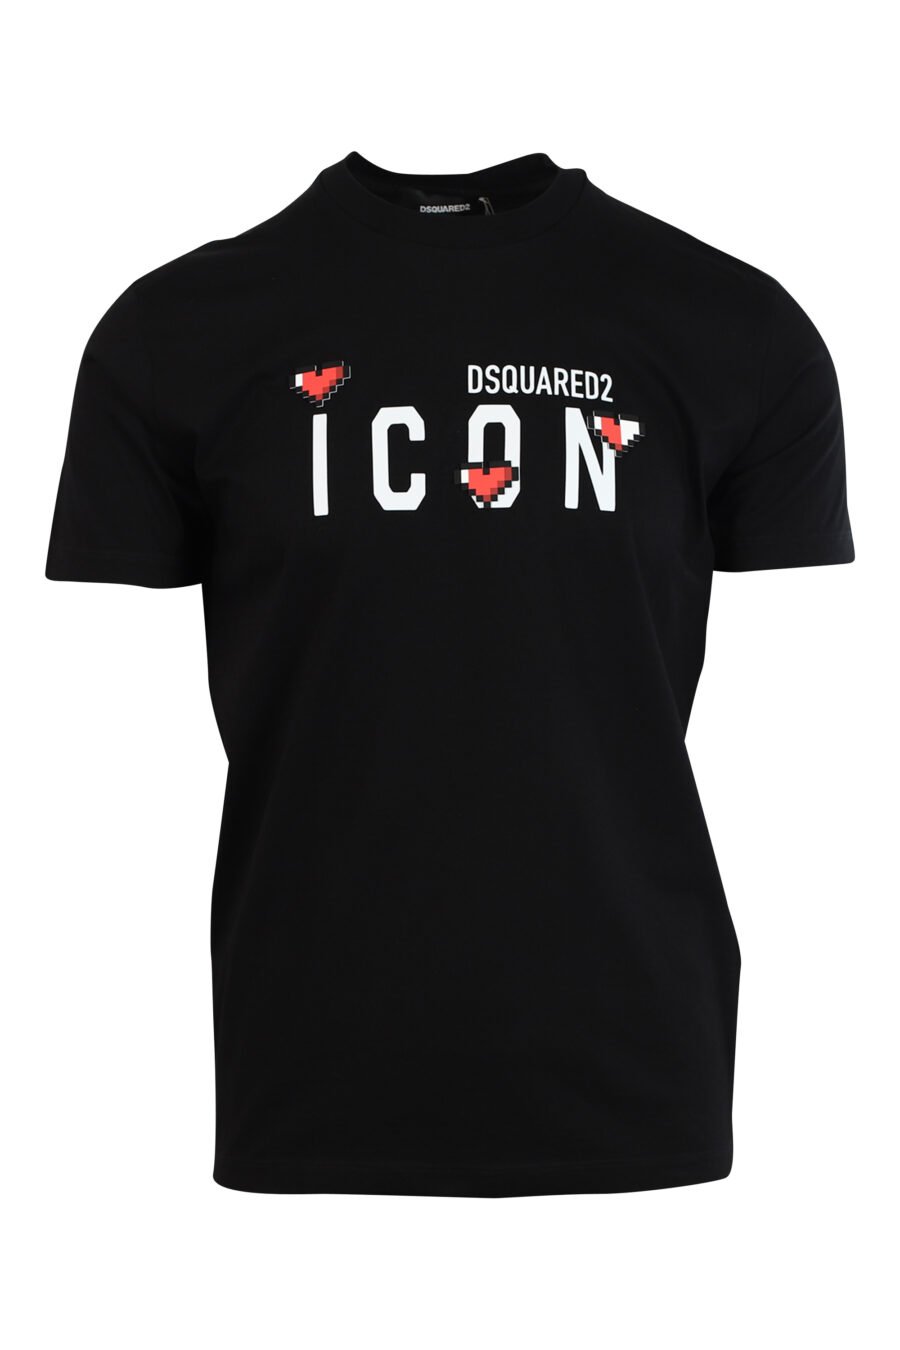 Black T-shirt with maxilogo "icon heart pixel" - 8052134980910